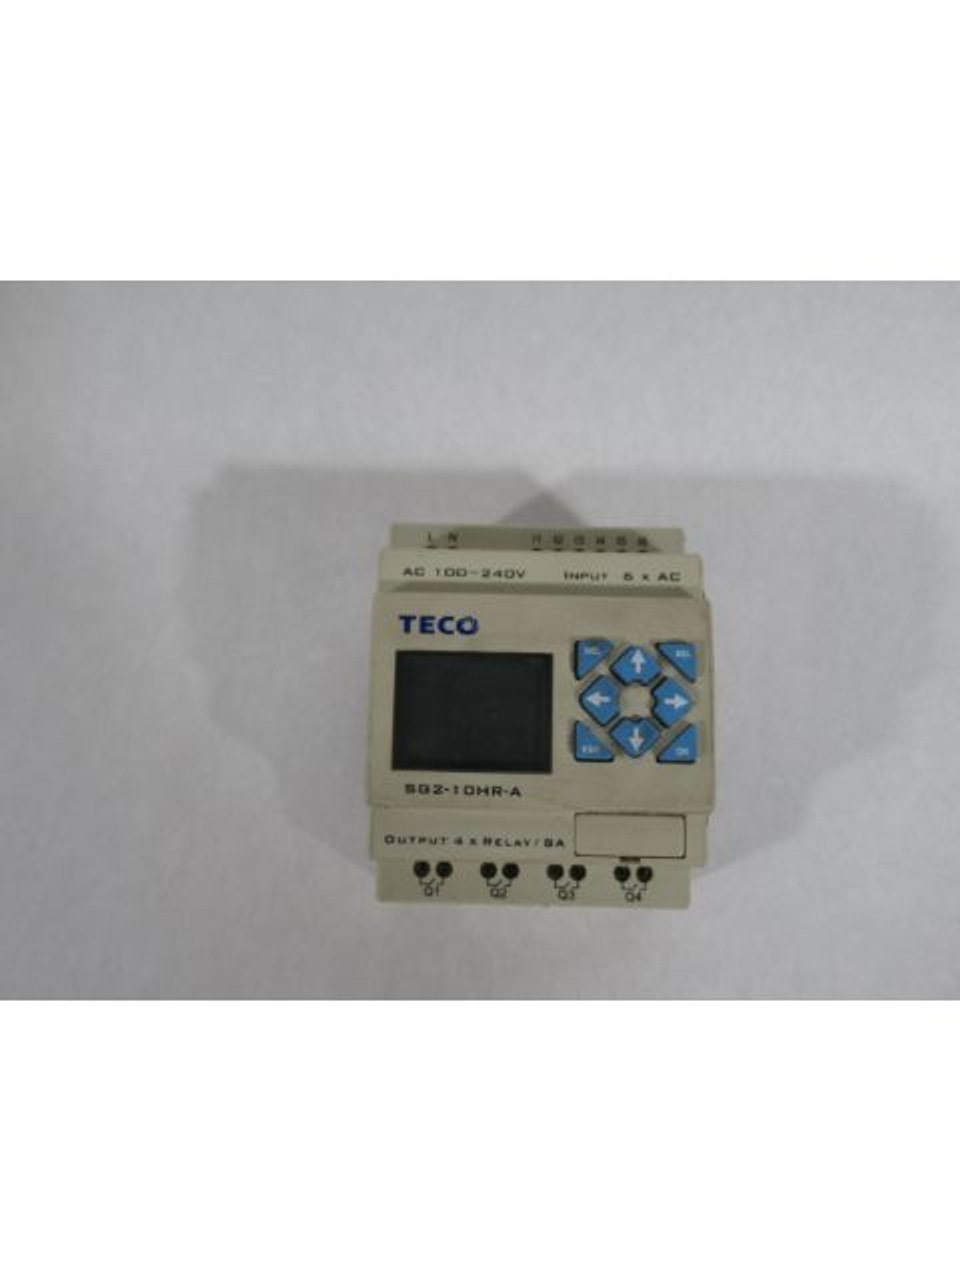 Teco SG2-10HRA Programmable Logic Relay Ver. 3.6 100-240V 90mA 50/60Hz USED